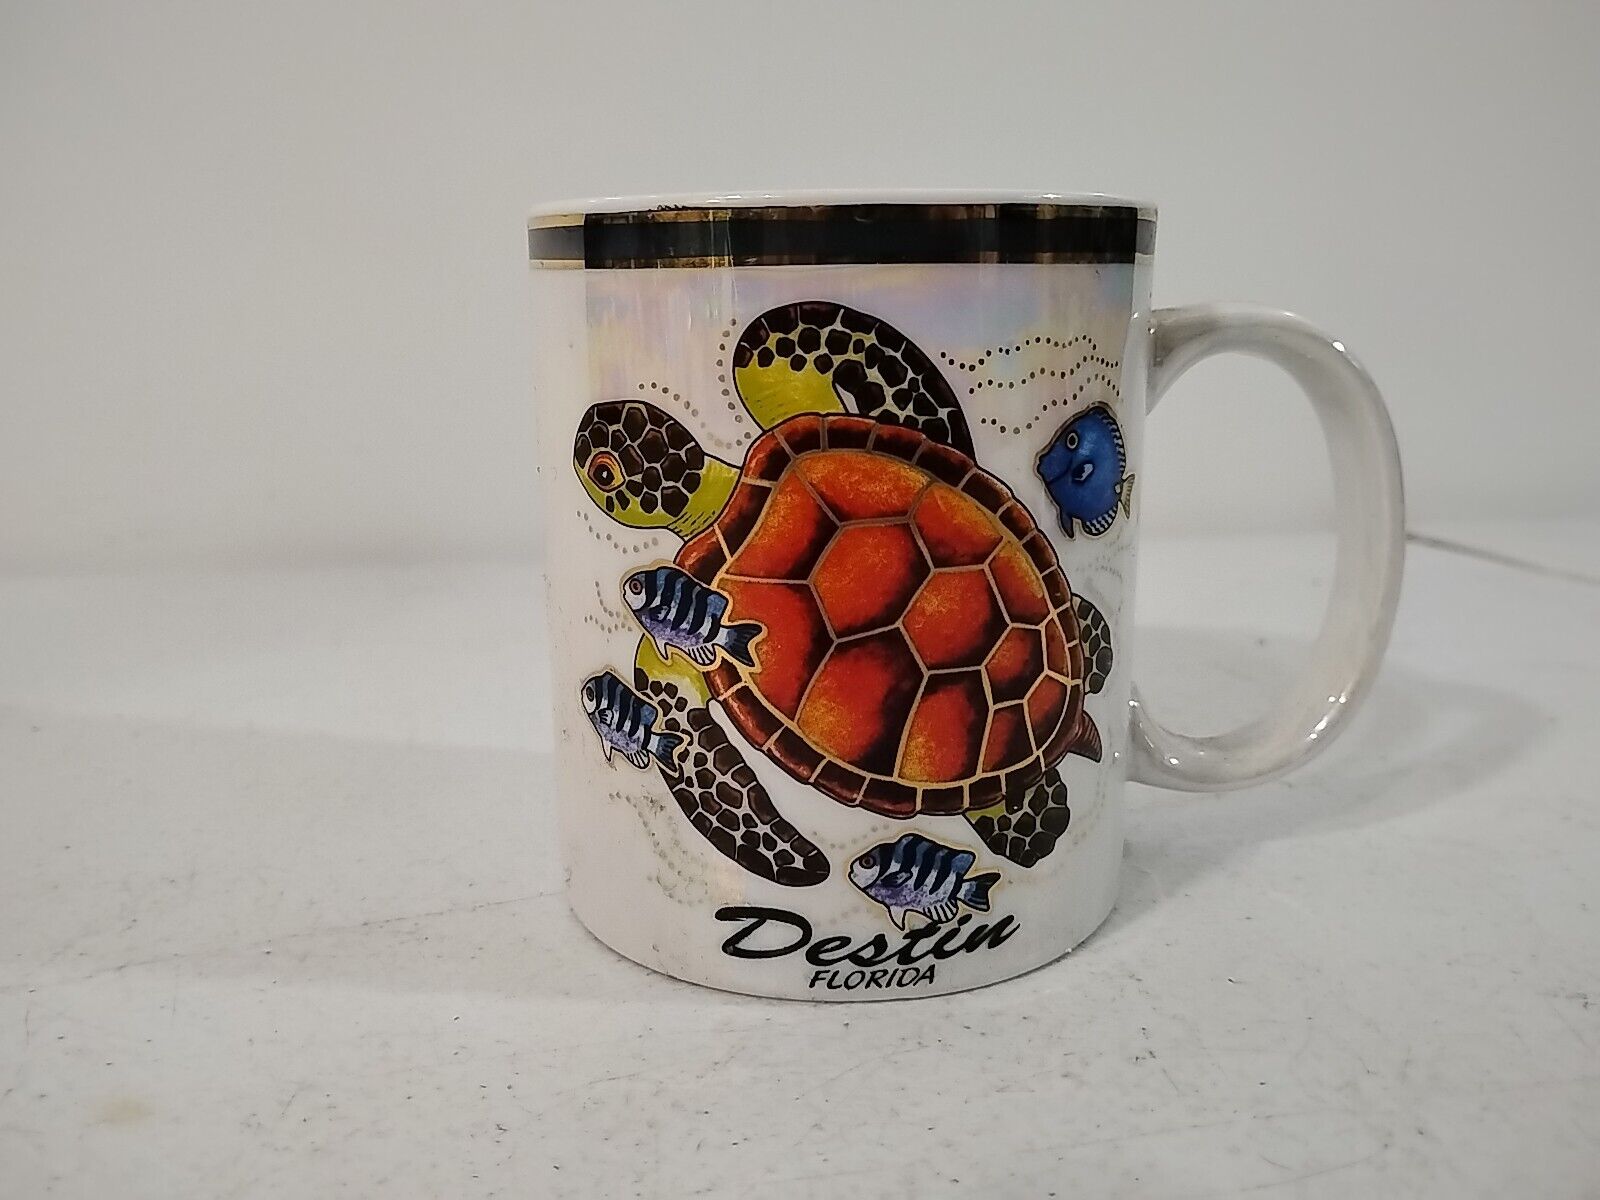 Destin, florida iridescent mug with sea turtle and fish